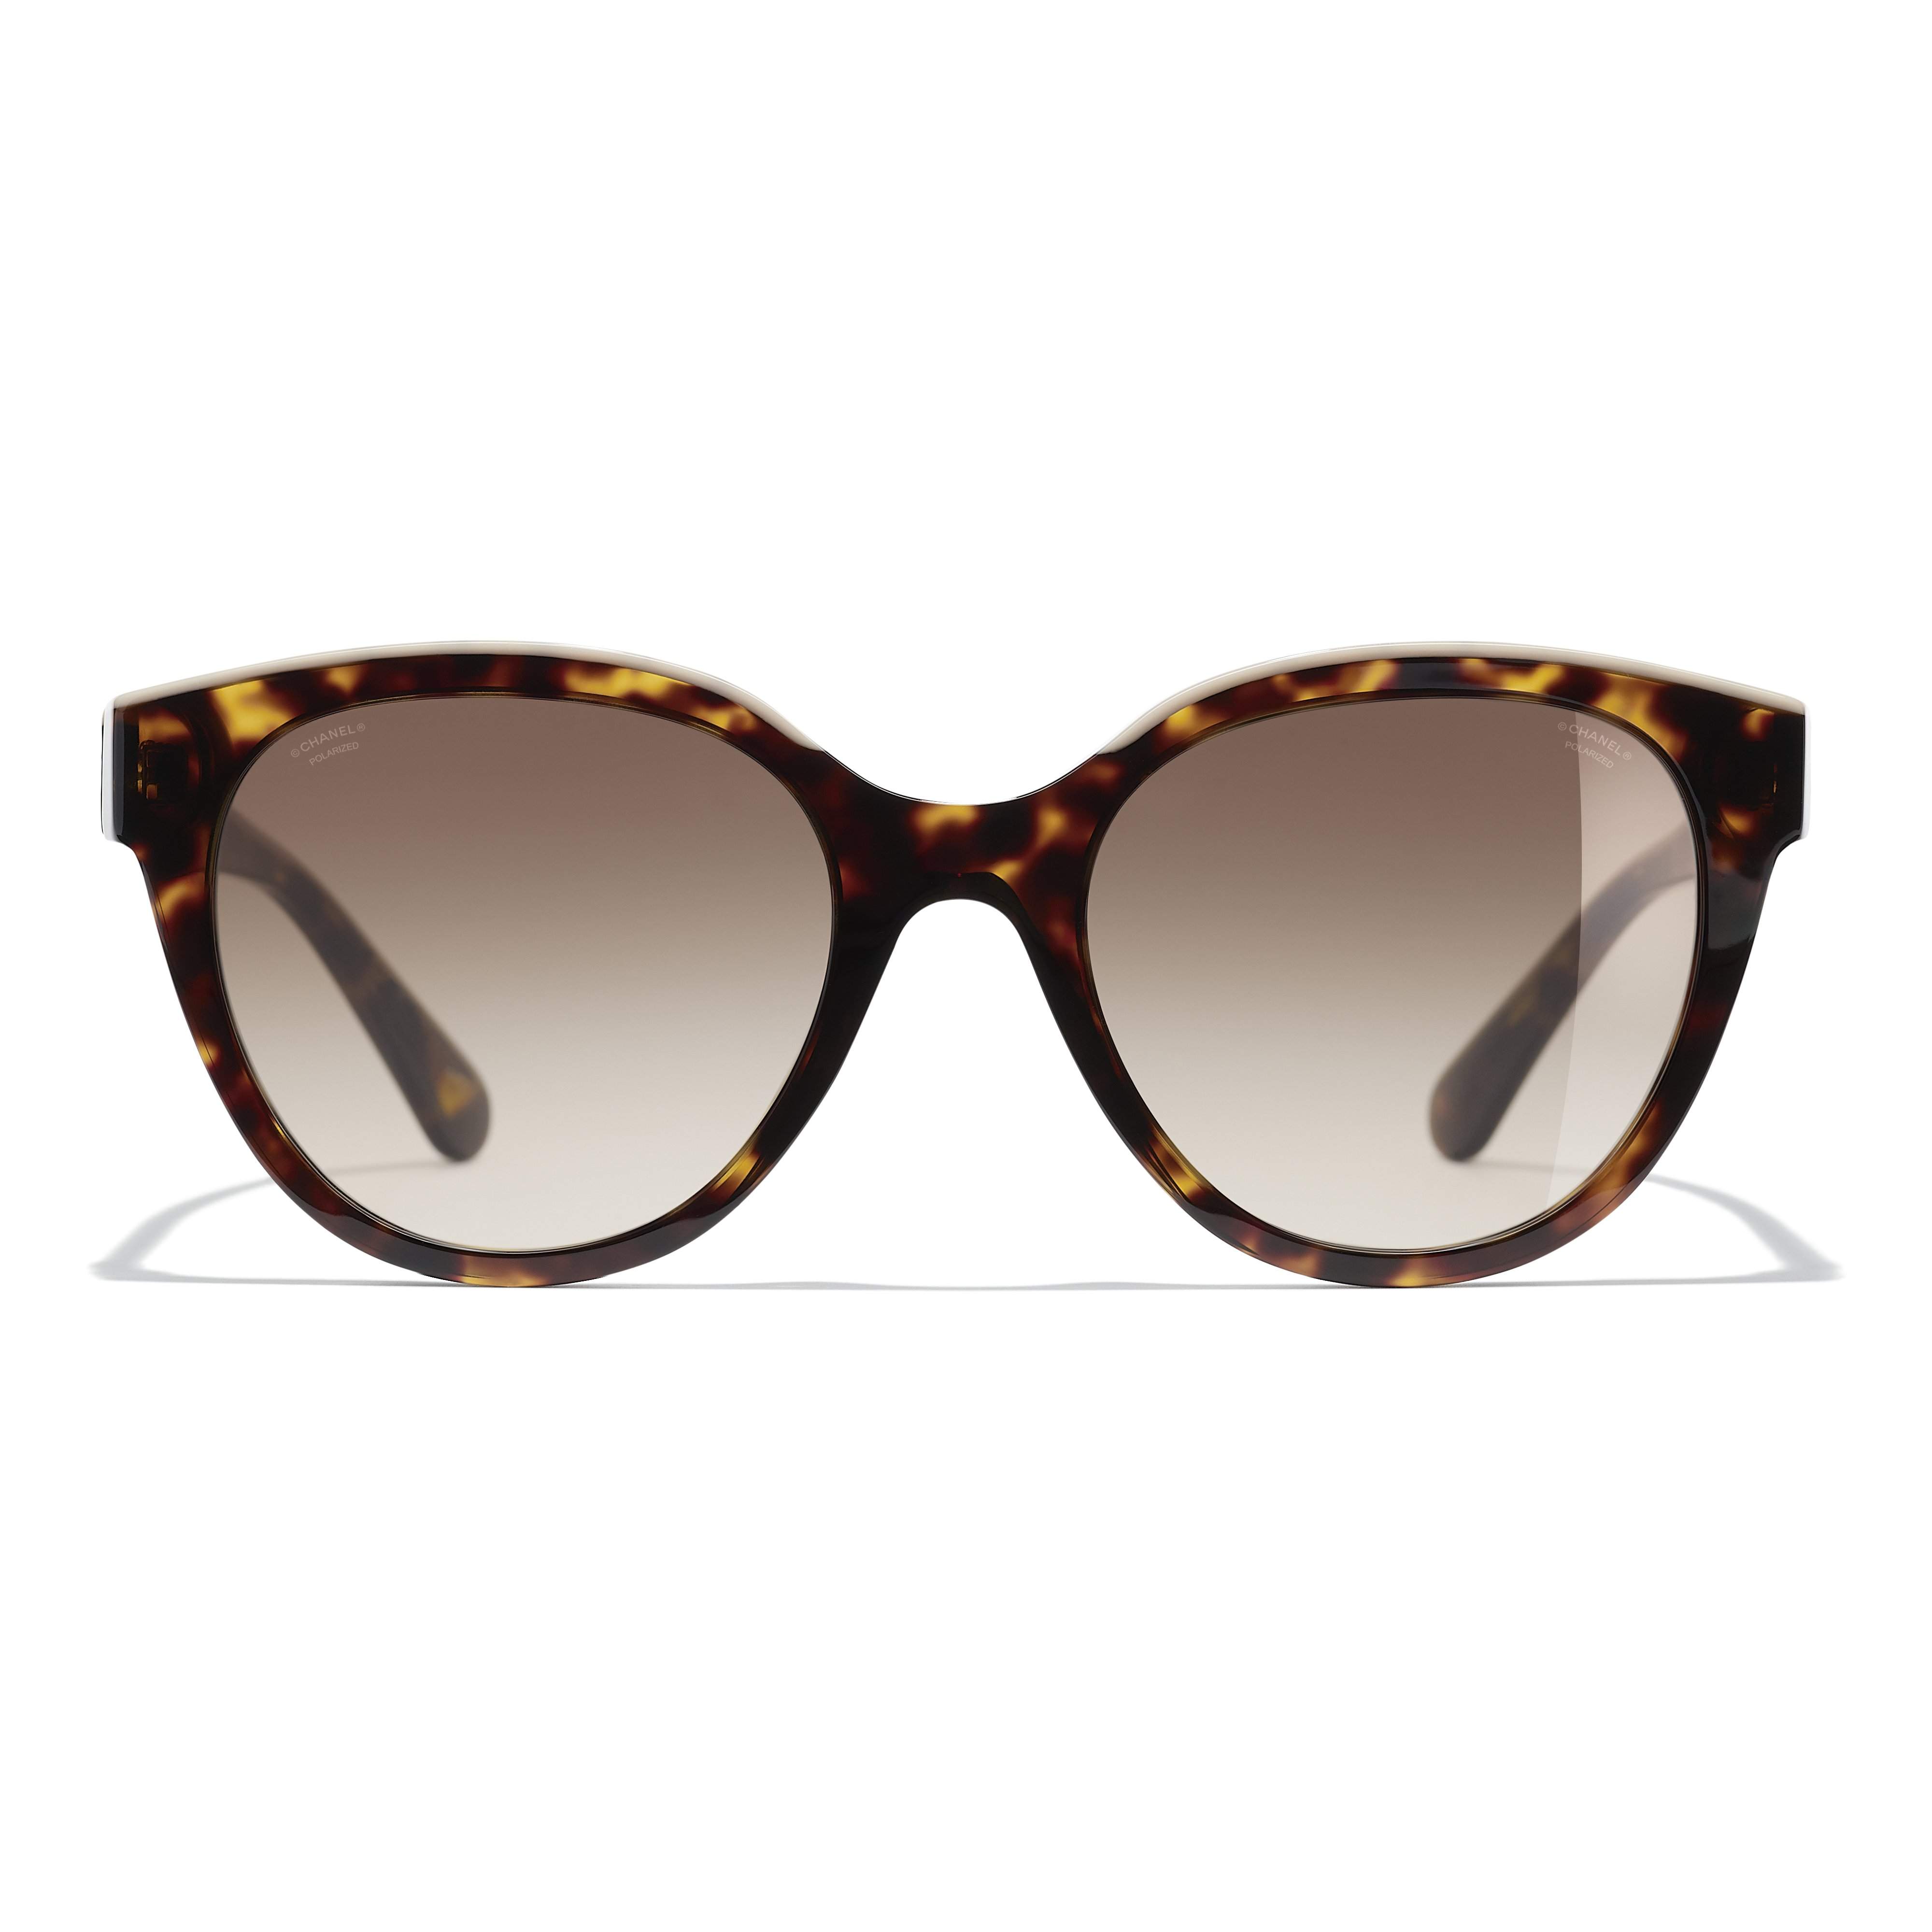 Sunglasses Chanel CH5414 1682/S9 54-20 Ecaille Polarized Gradient in stock, Price 241,67 €